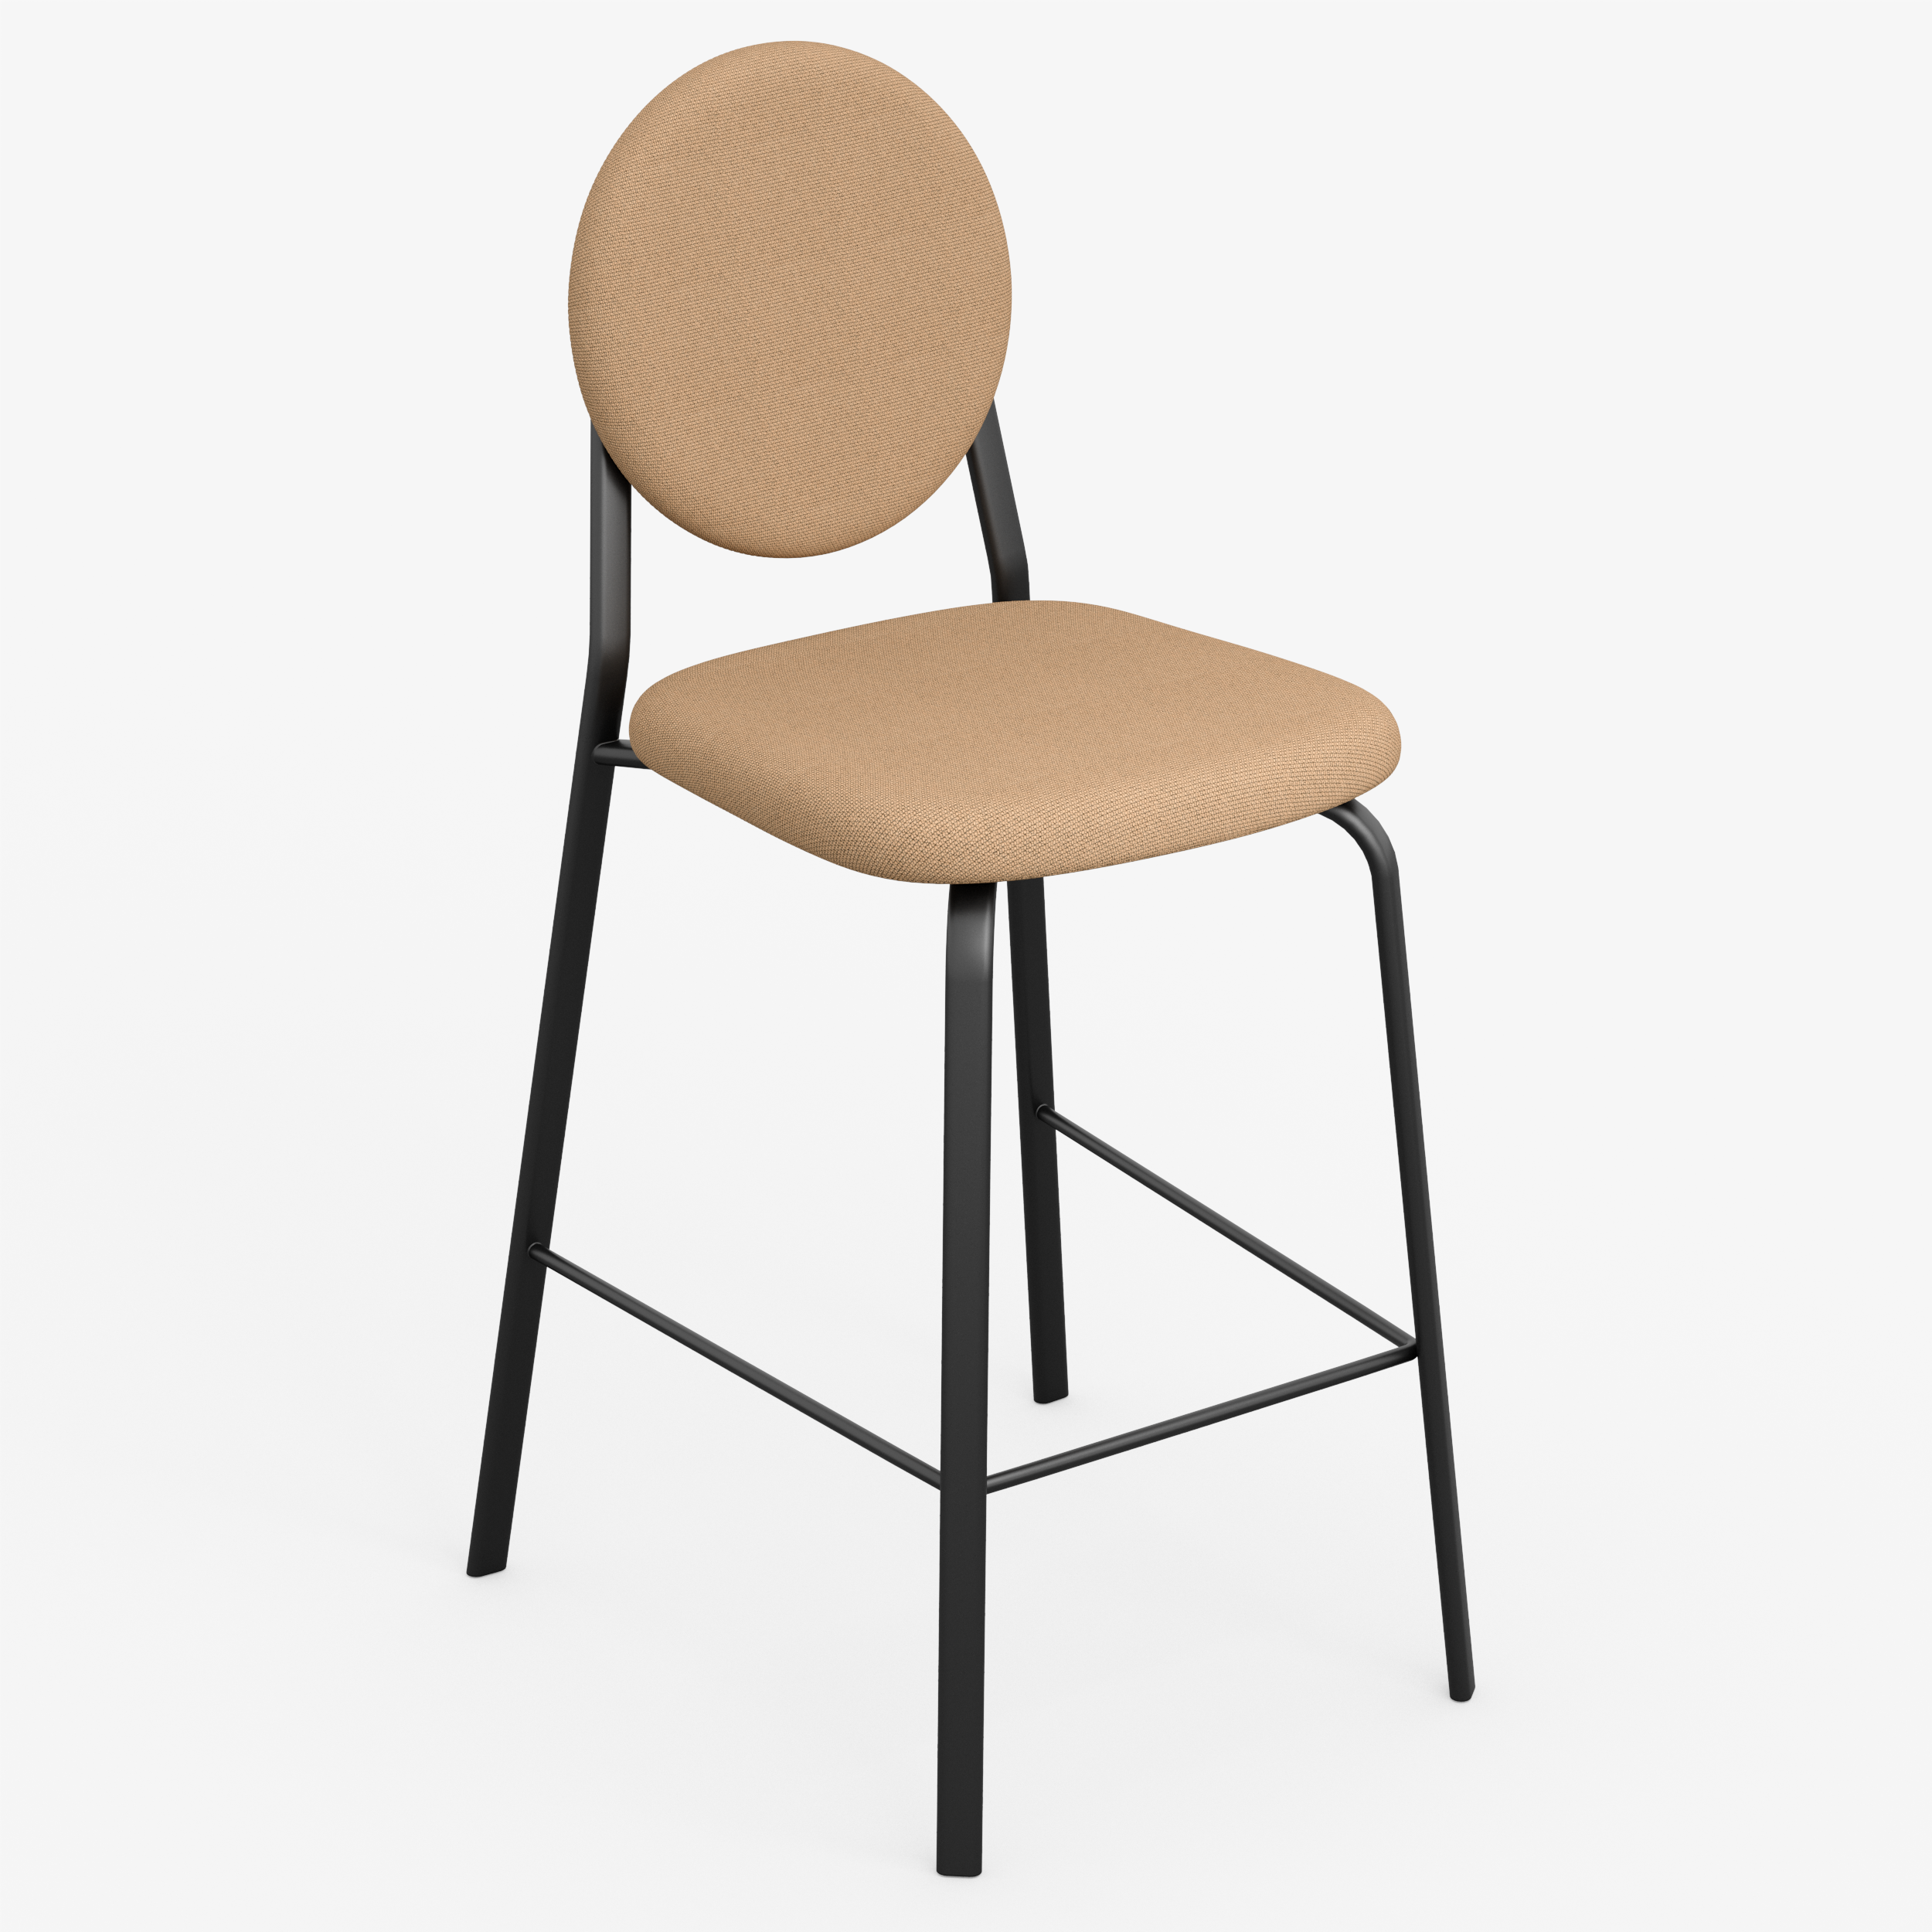 Form - Chair / High (Round, Persian Orange)